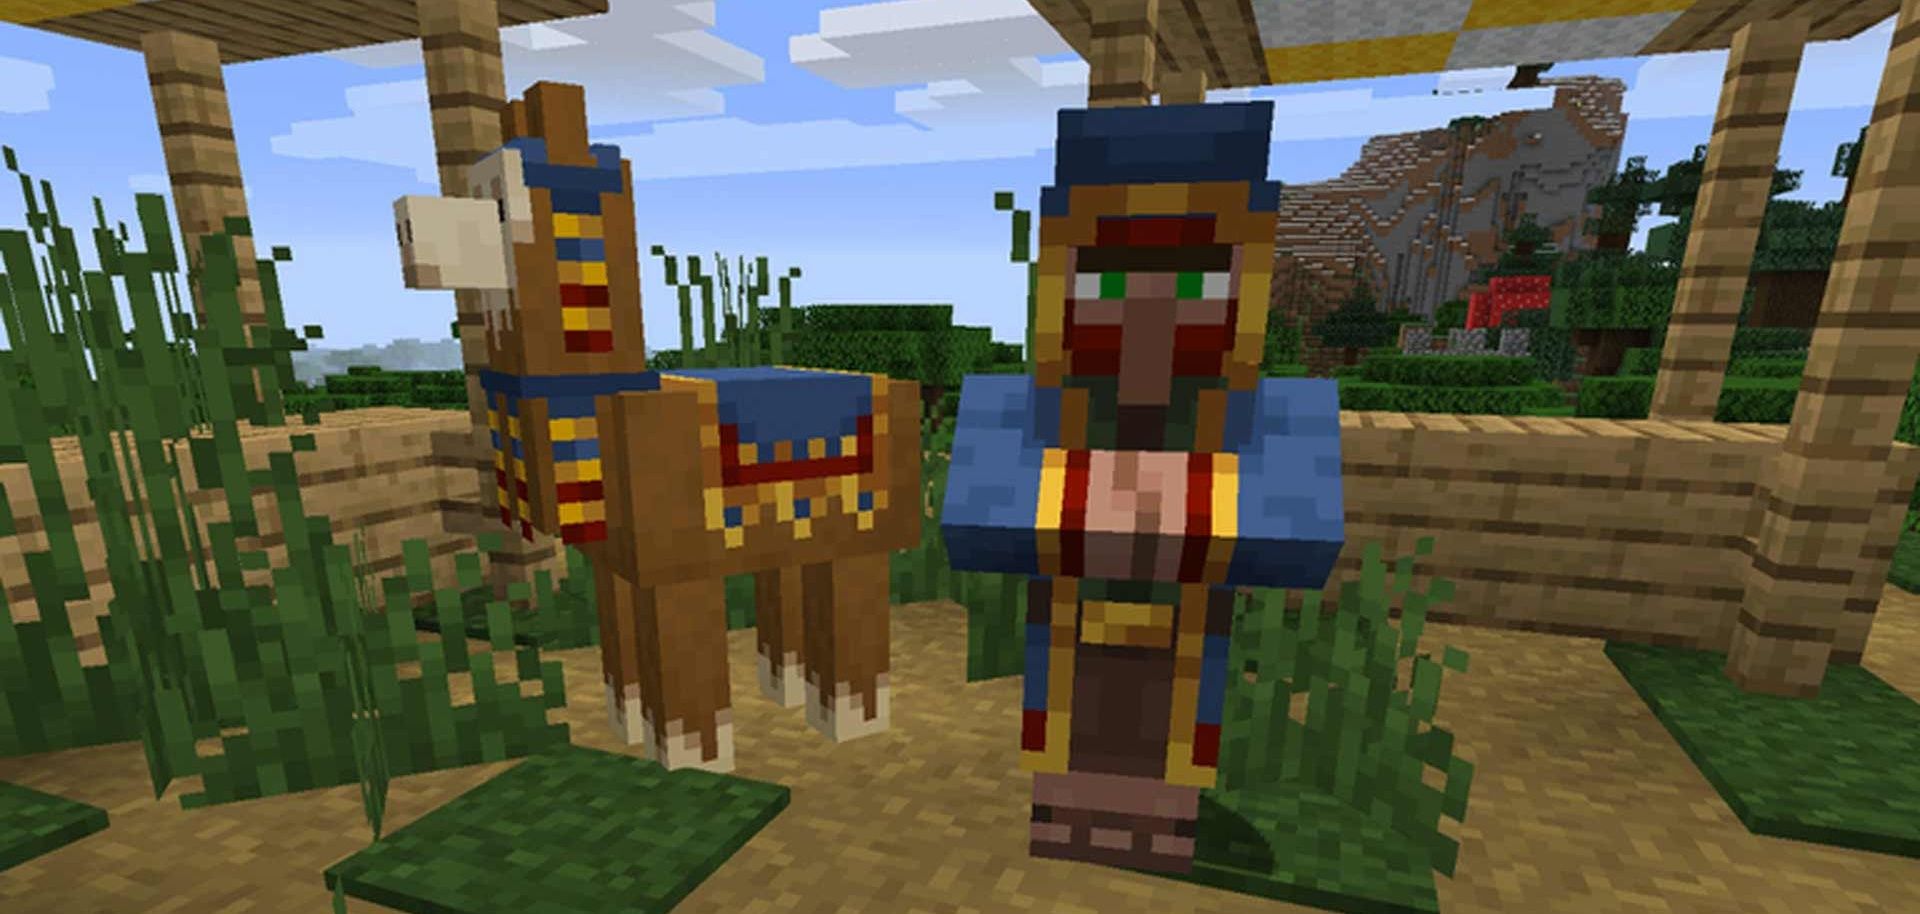 Minecraft Wandering Trader with Llama